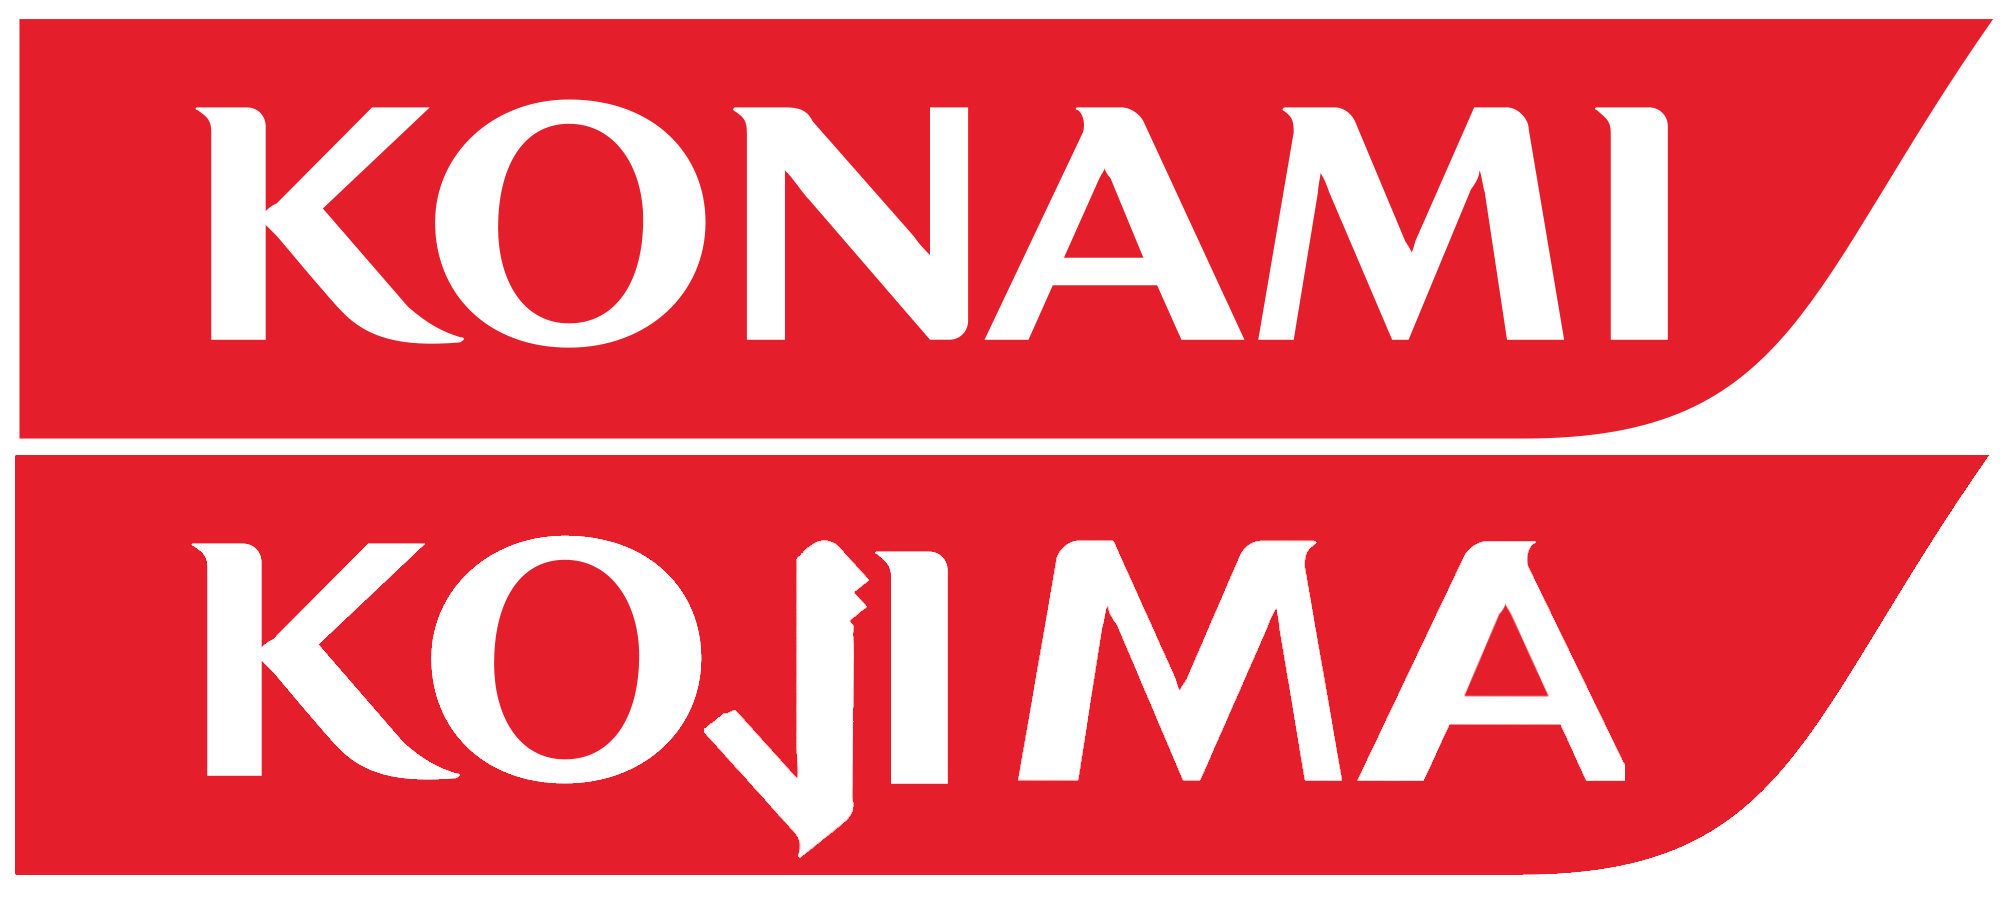 Konami Logo - The New Konami Logo